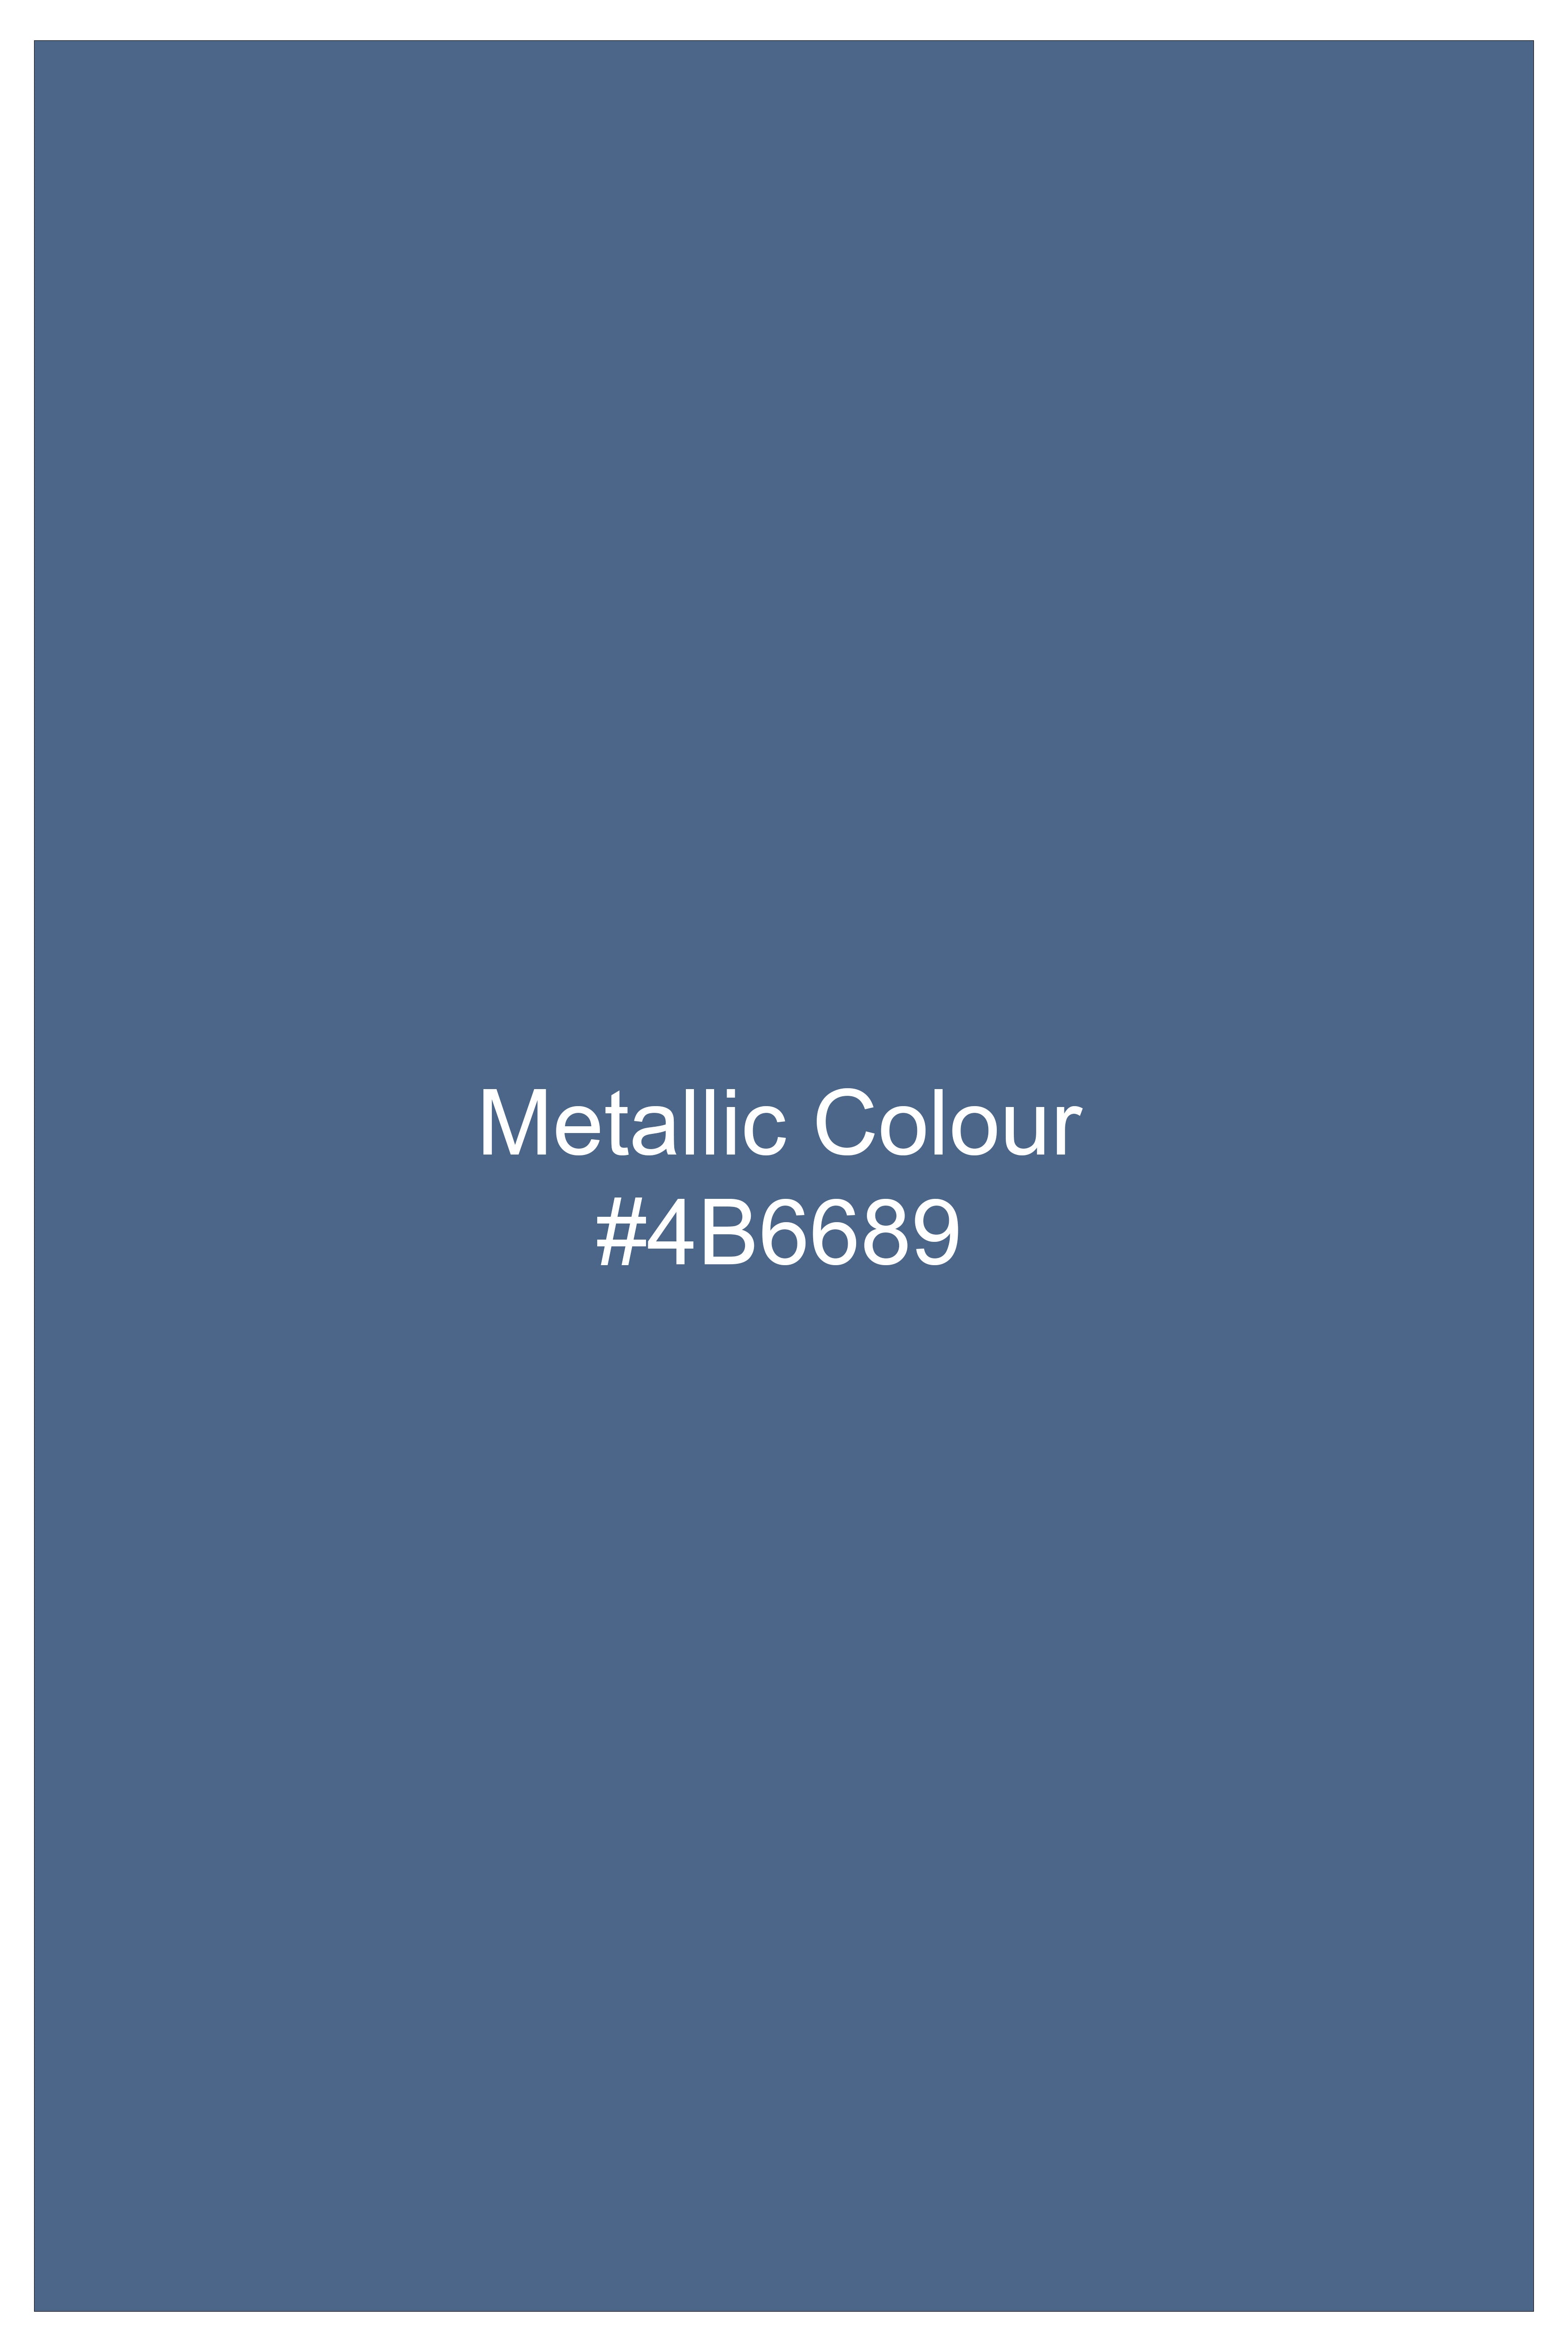 Metalic Blue Plaid Wool Blend Pant